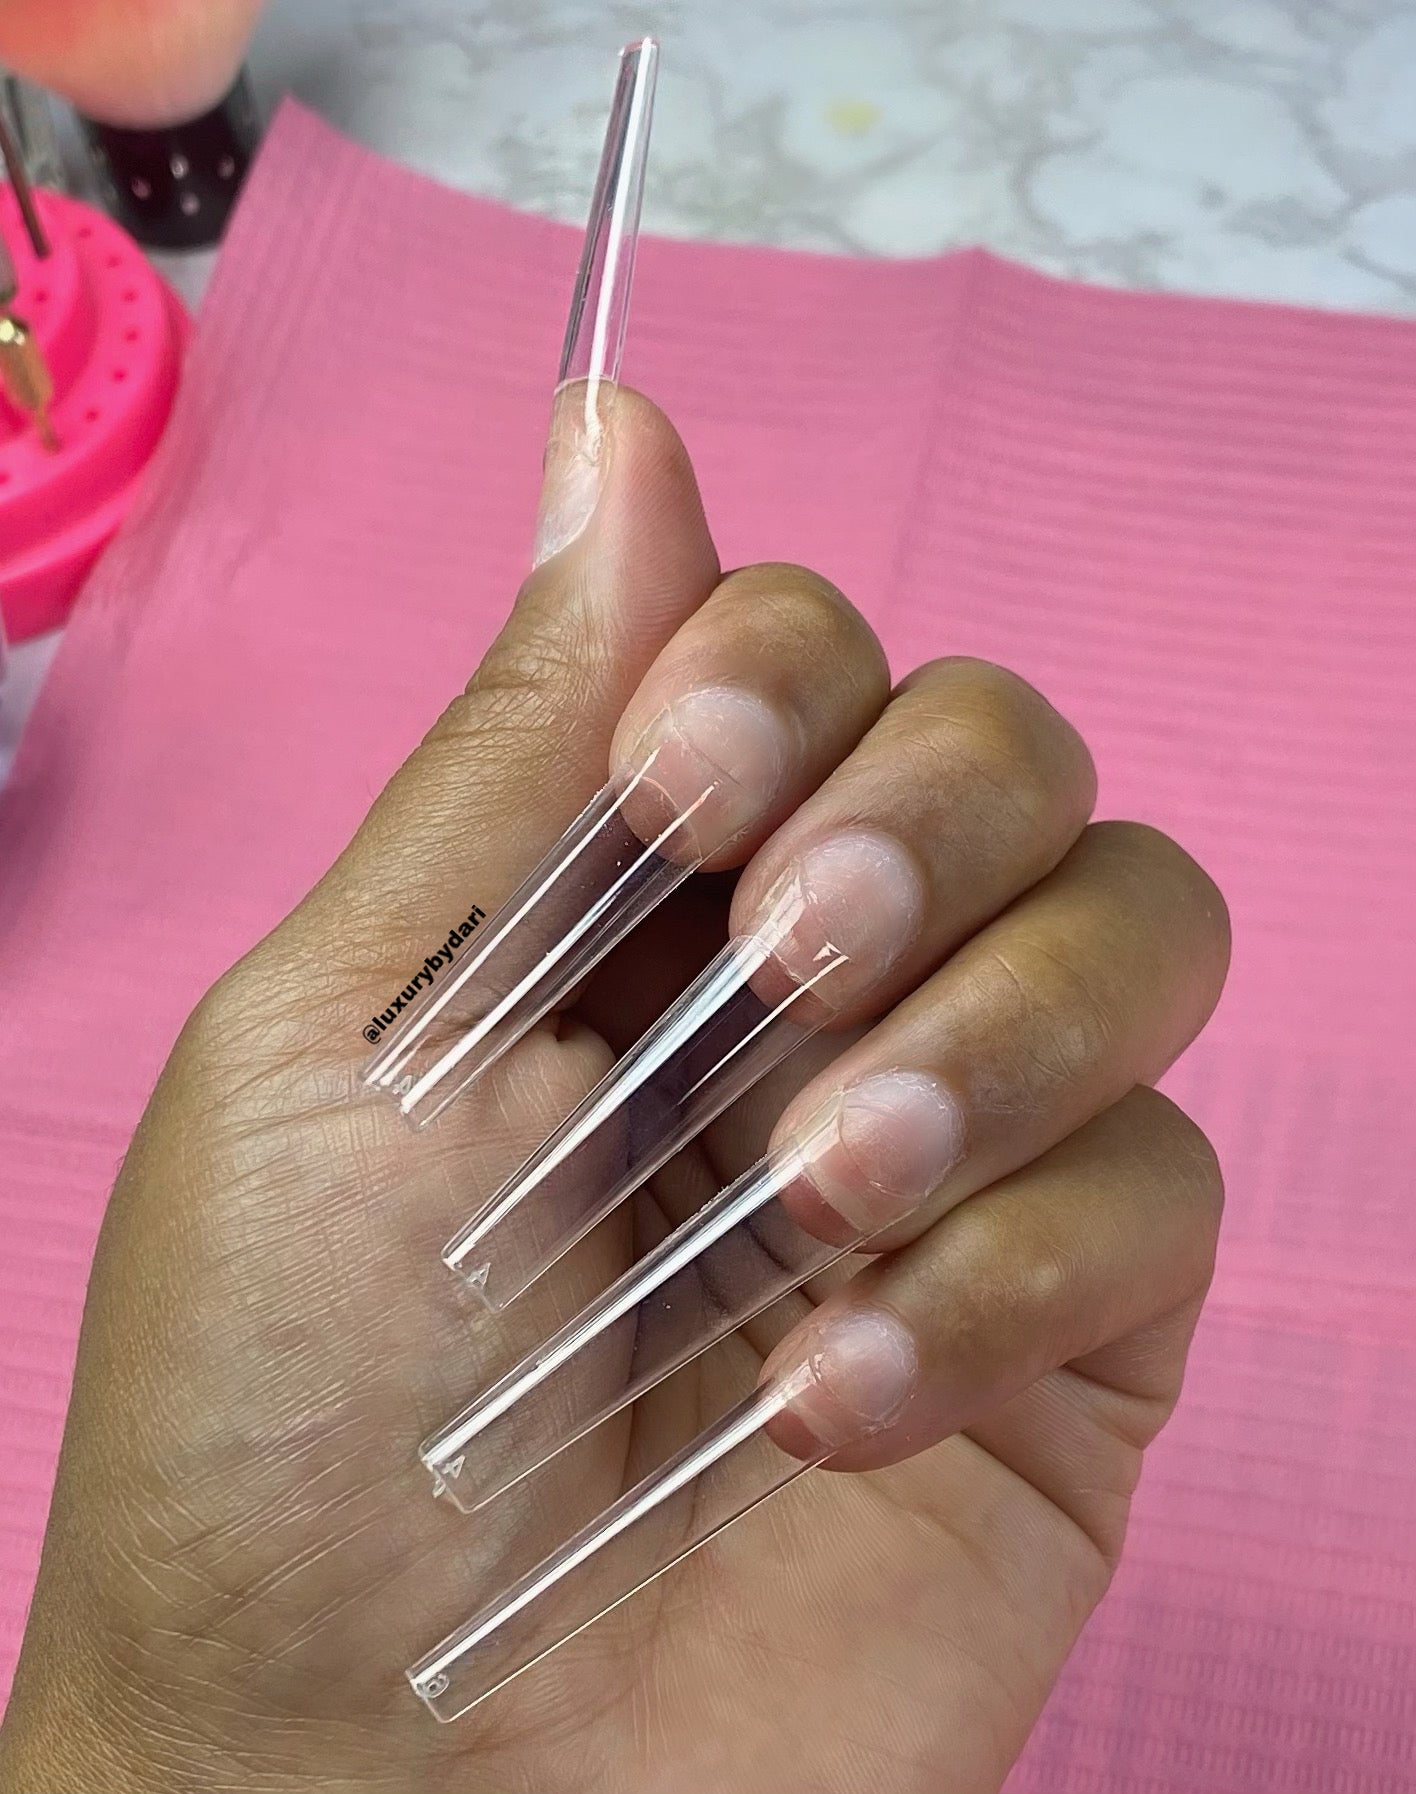 Acrylic nail tips